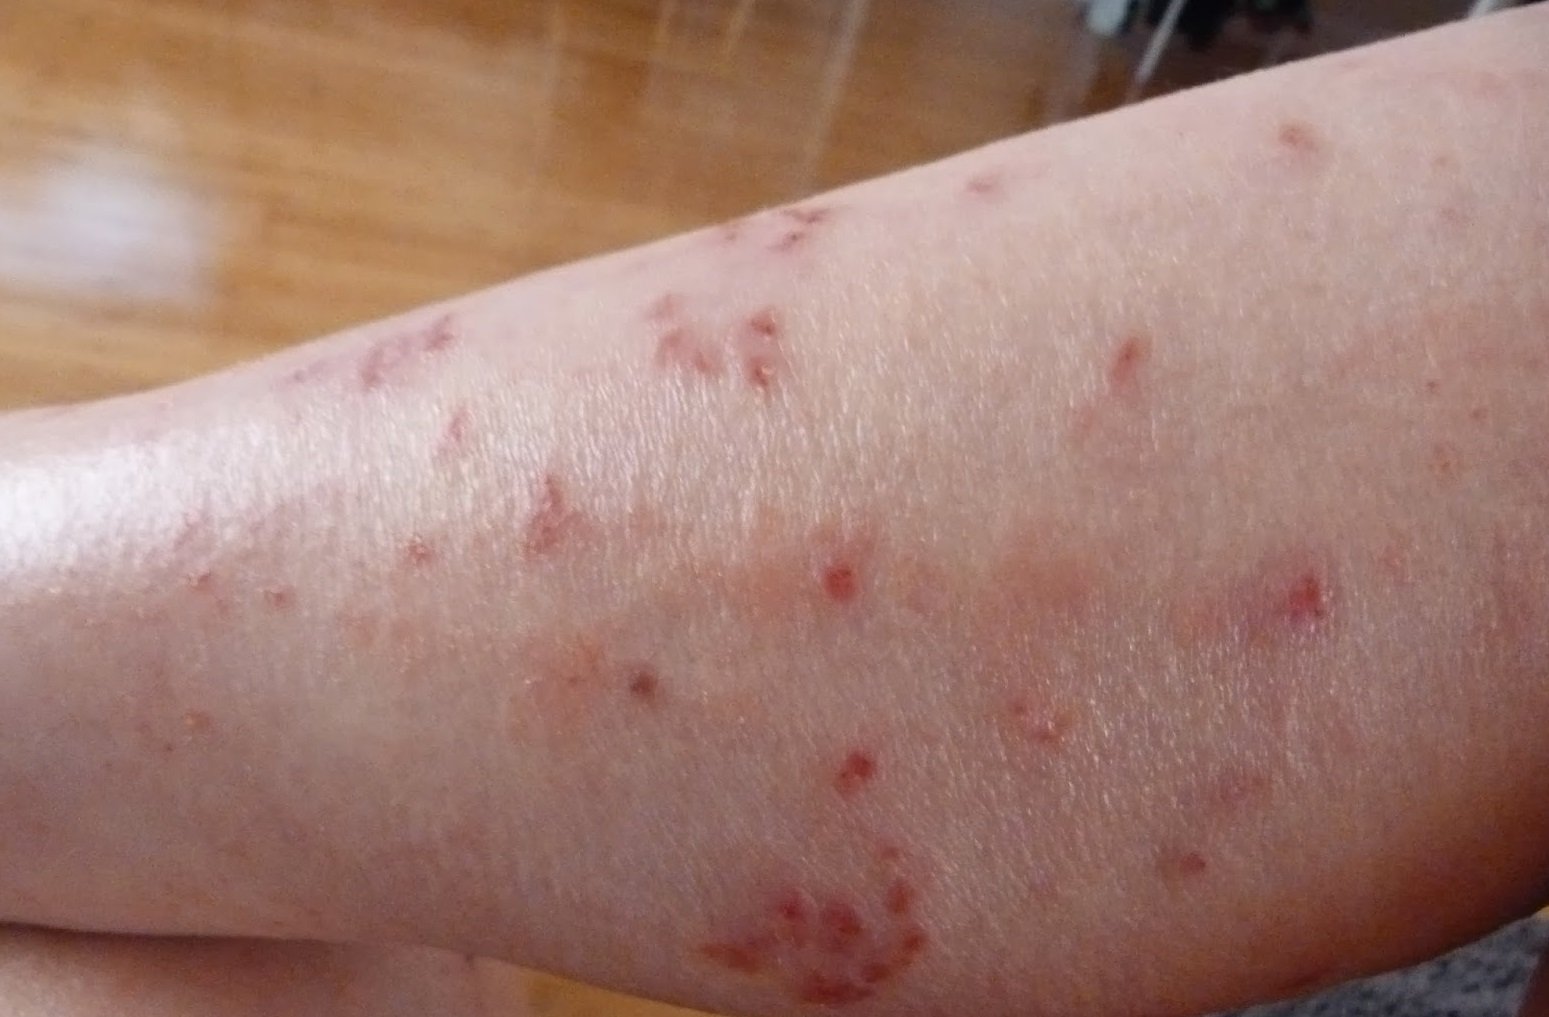 Photos of Eczema on Adults Legs ~ Treatment for Eczema